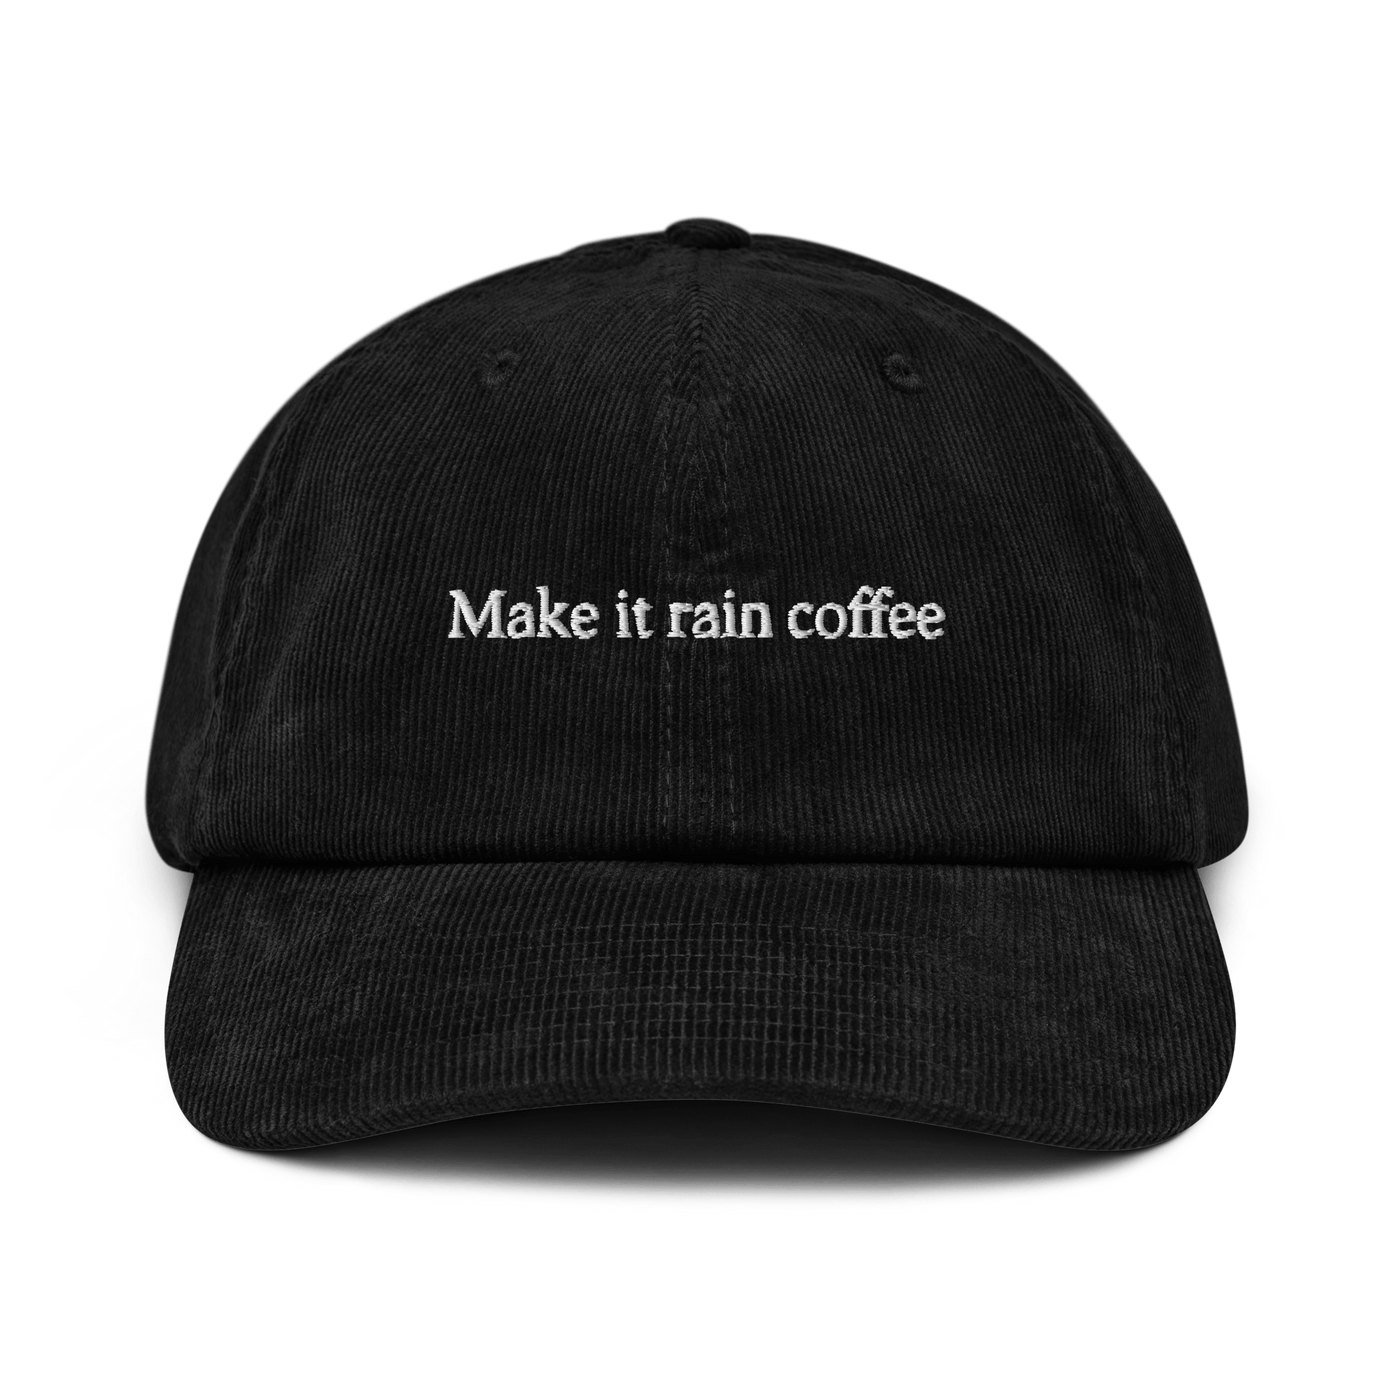 Make it Rain Coffee Corduroy hat - Black - - Just Another Cap Store